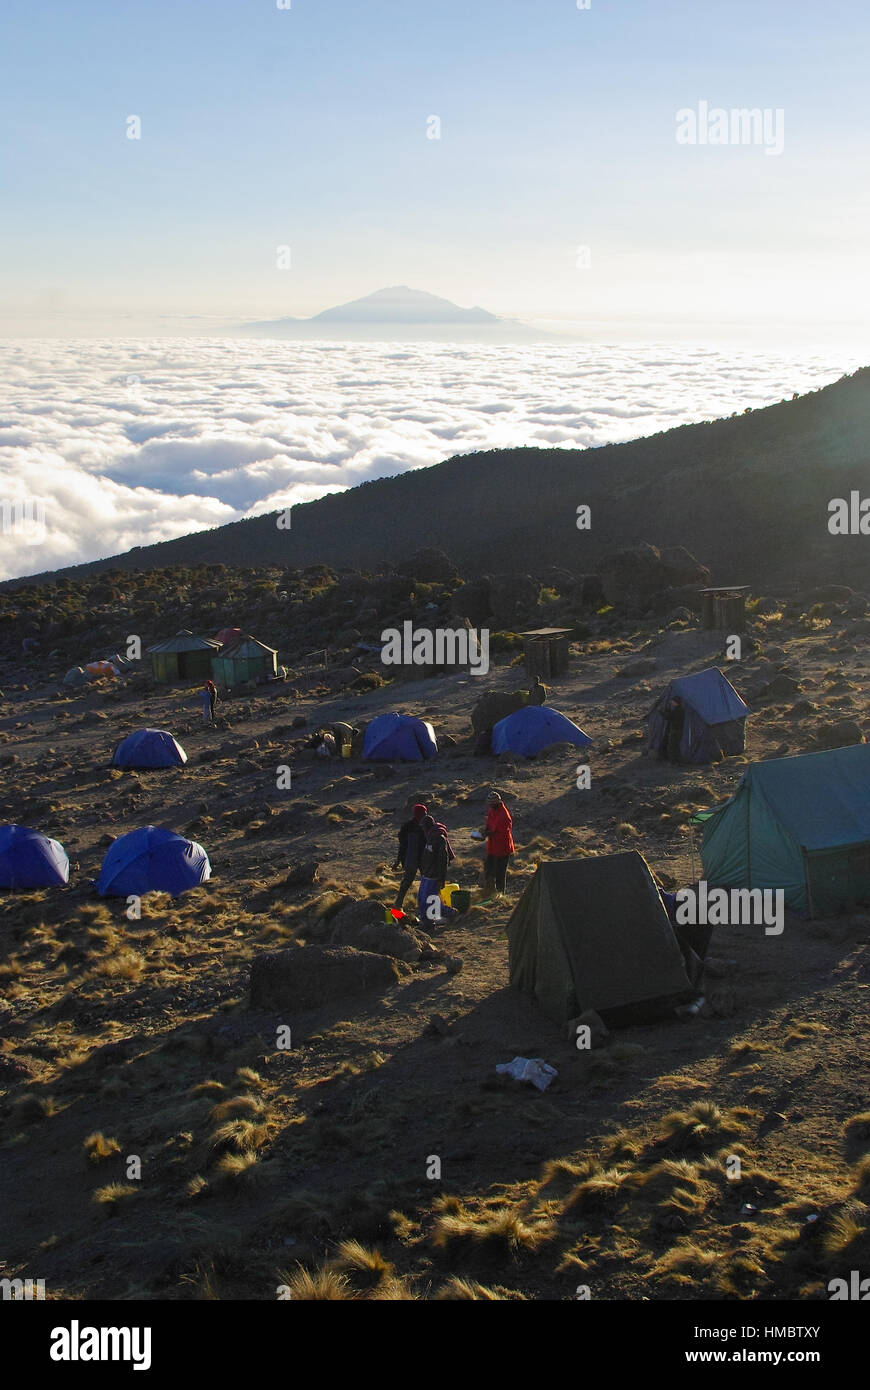 MOSHI,TZ - CIRCA  AUGUST 2010 - Sunset at Barranco camp on Kilimanjaro Stock Photo